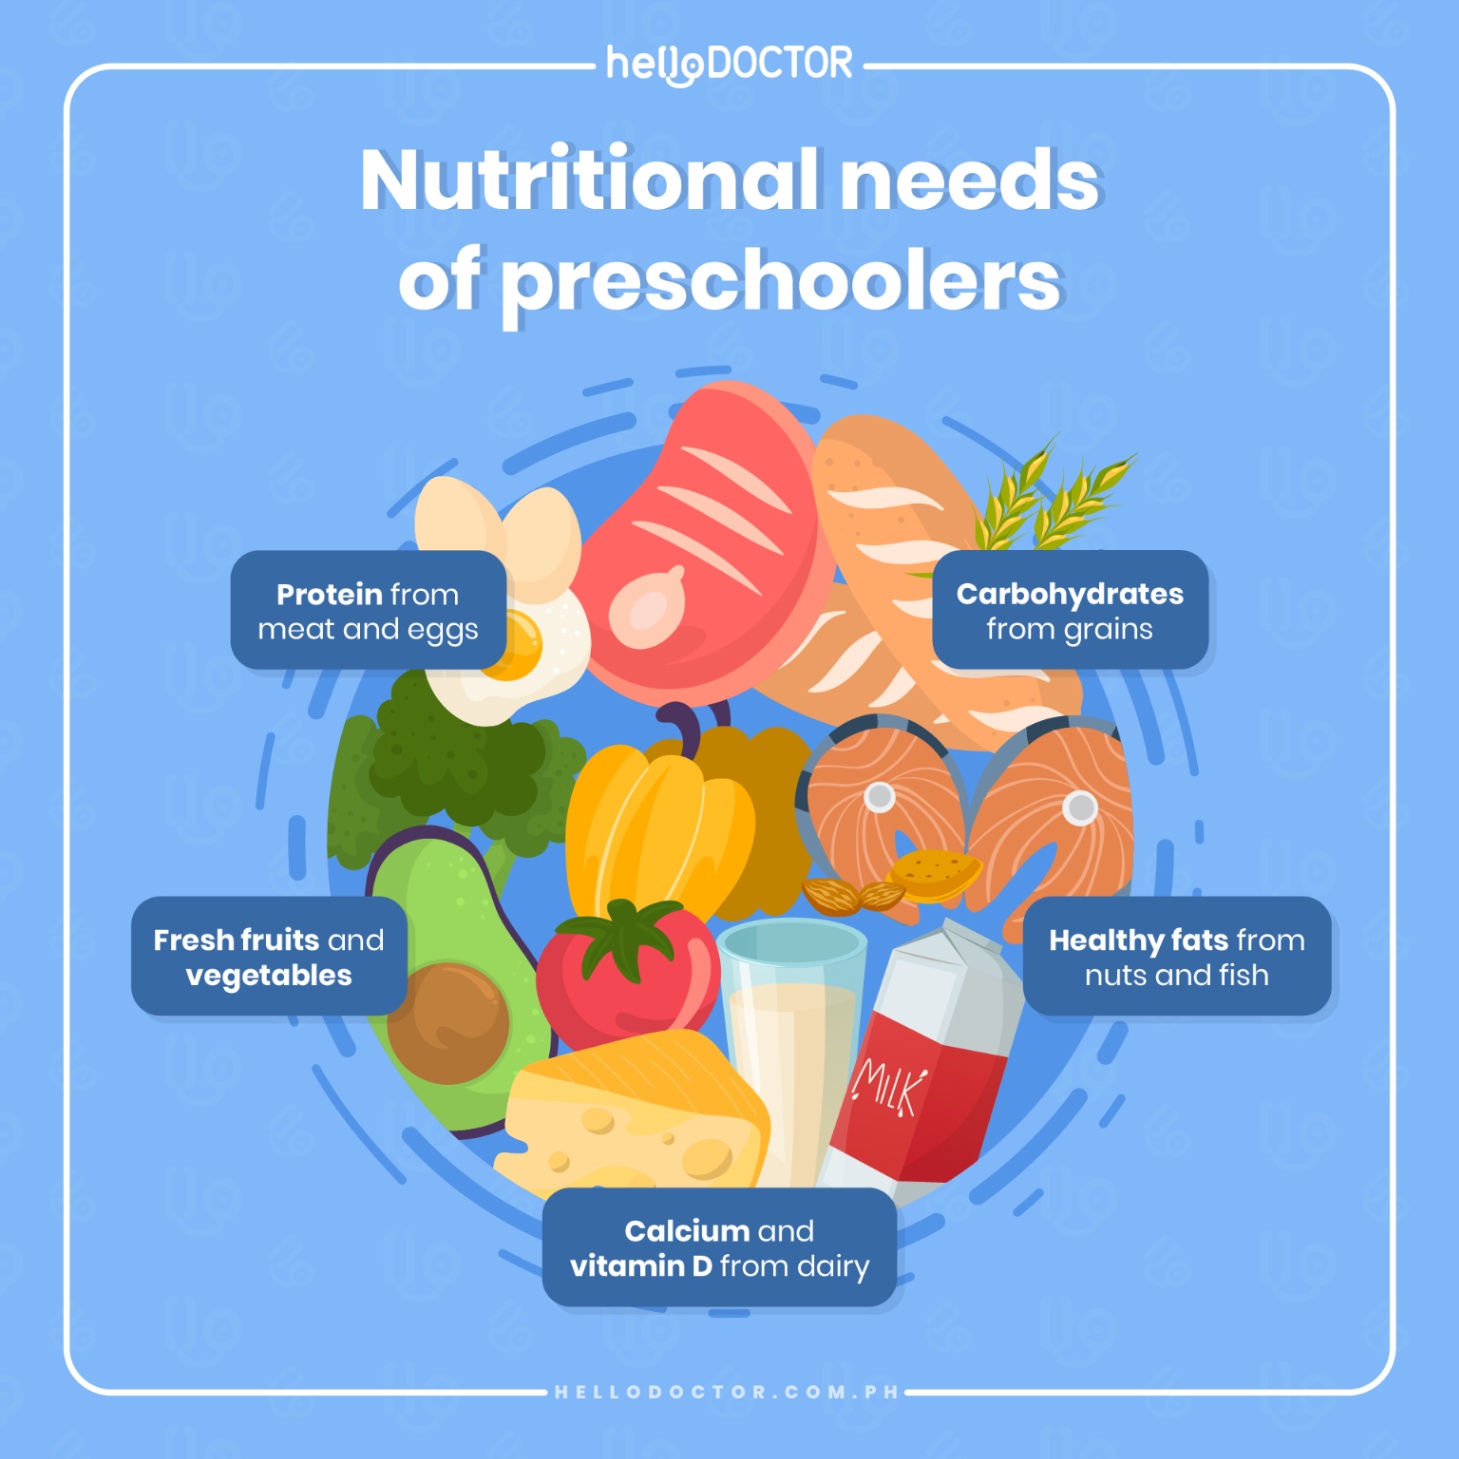 Usapang Nutrisyon - Anong best for preschoolers?